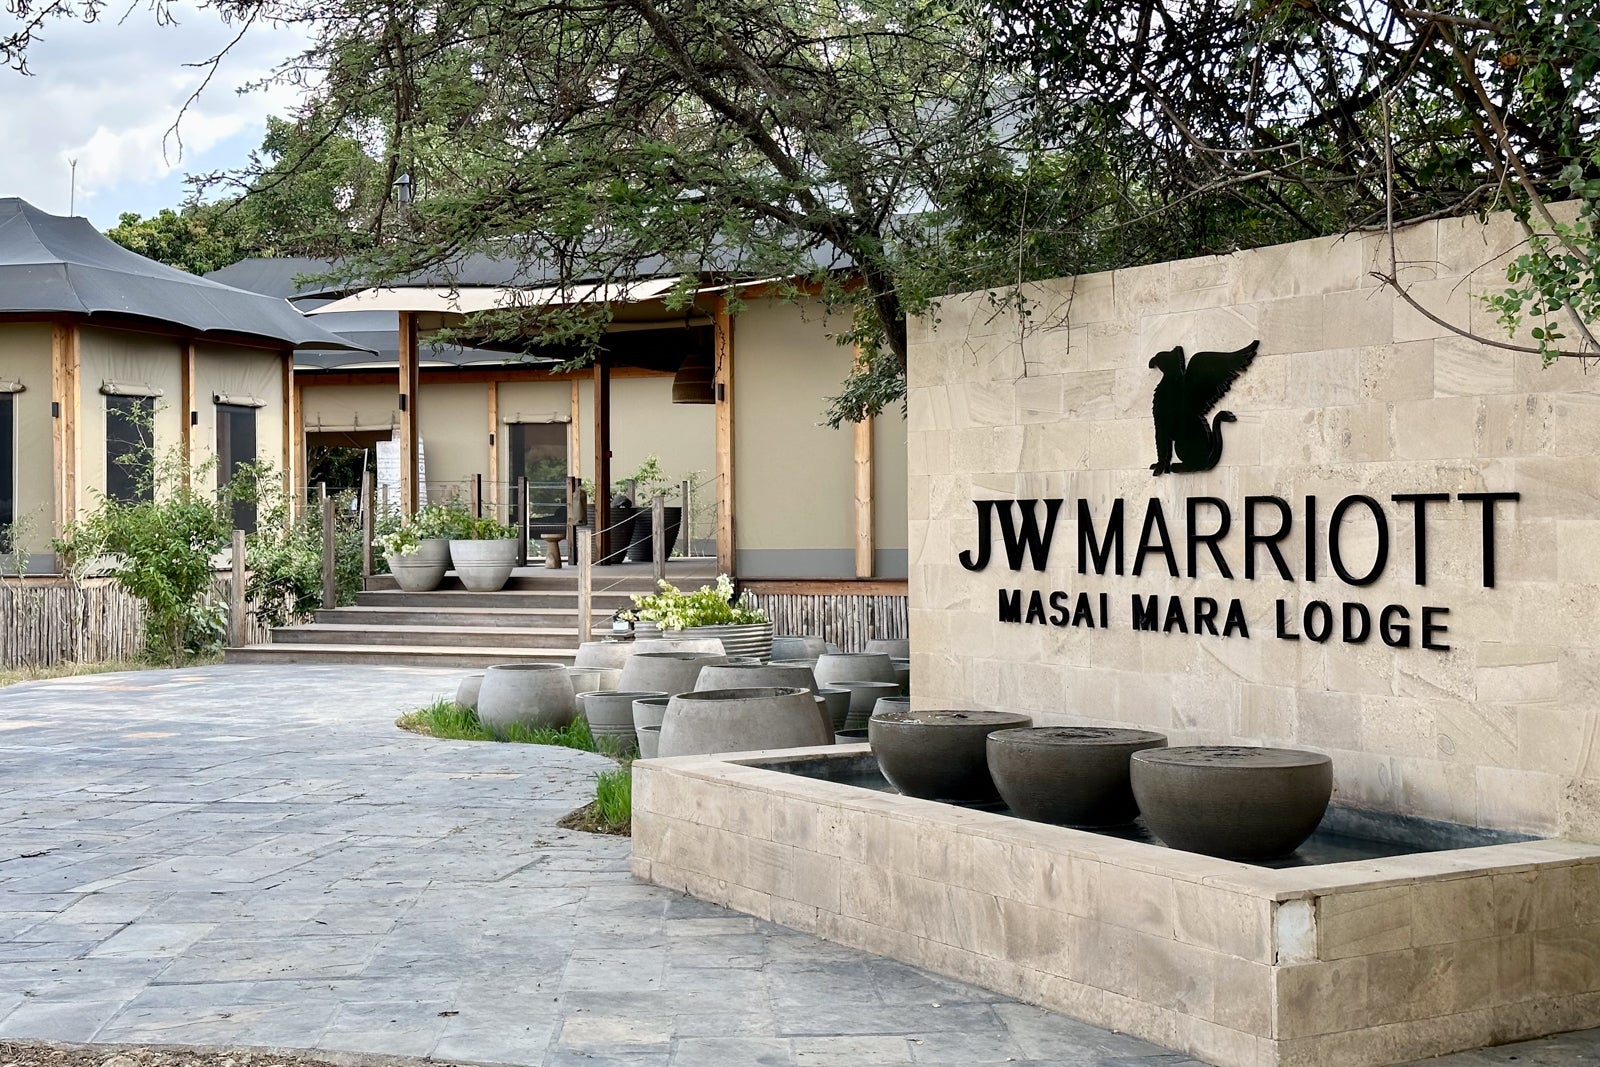 JW Marriott Masai Mara safari lodge review - The Points Guy - The Points Guy